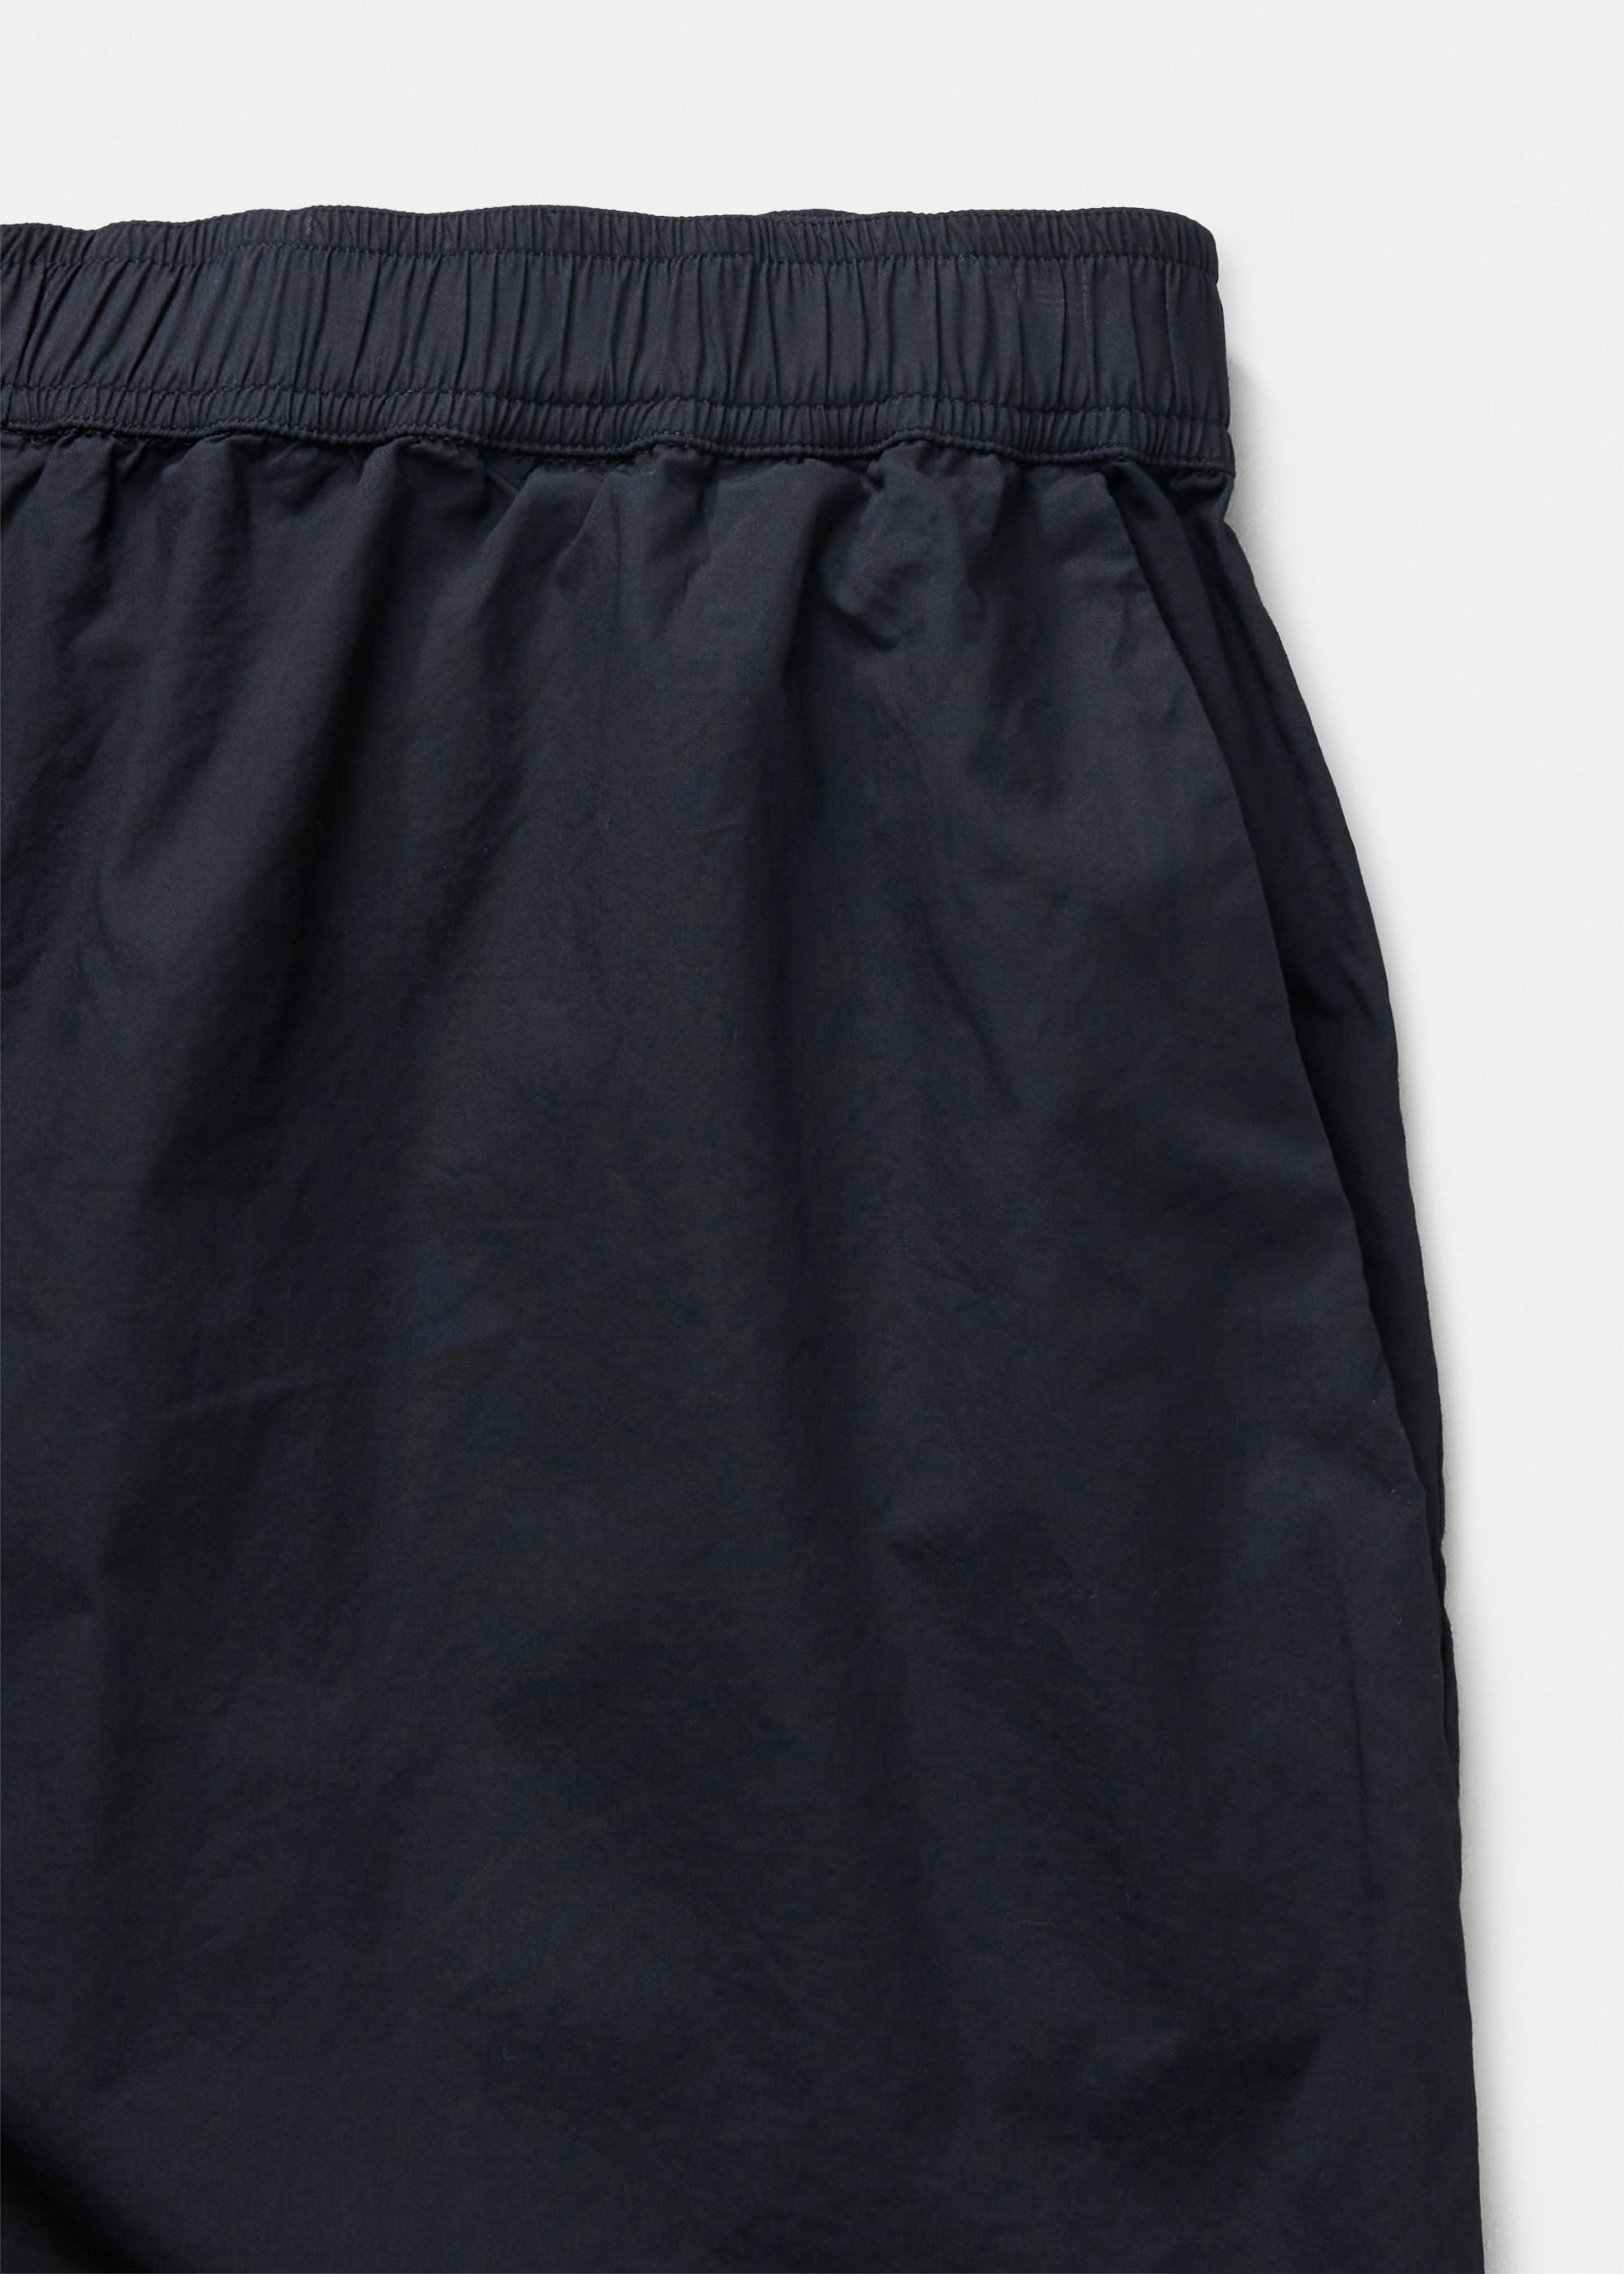 Lulu poplin shorts | Black Navy